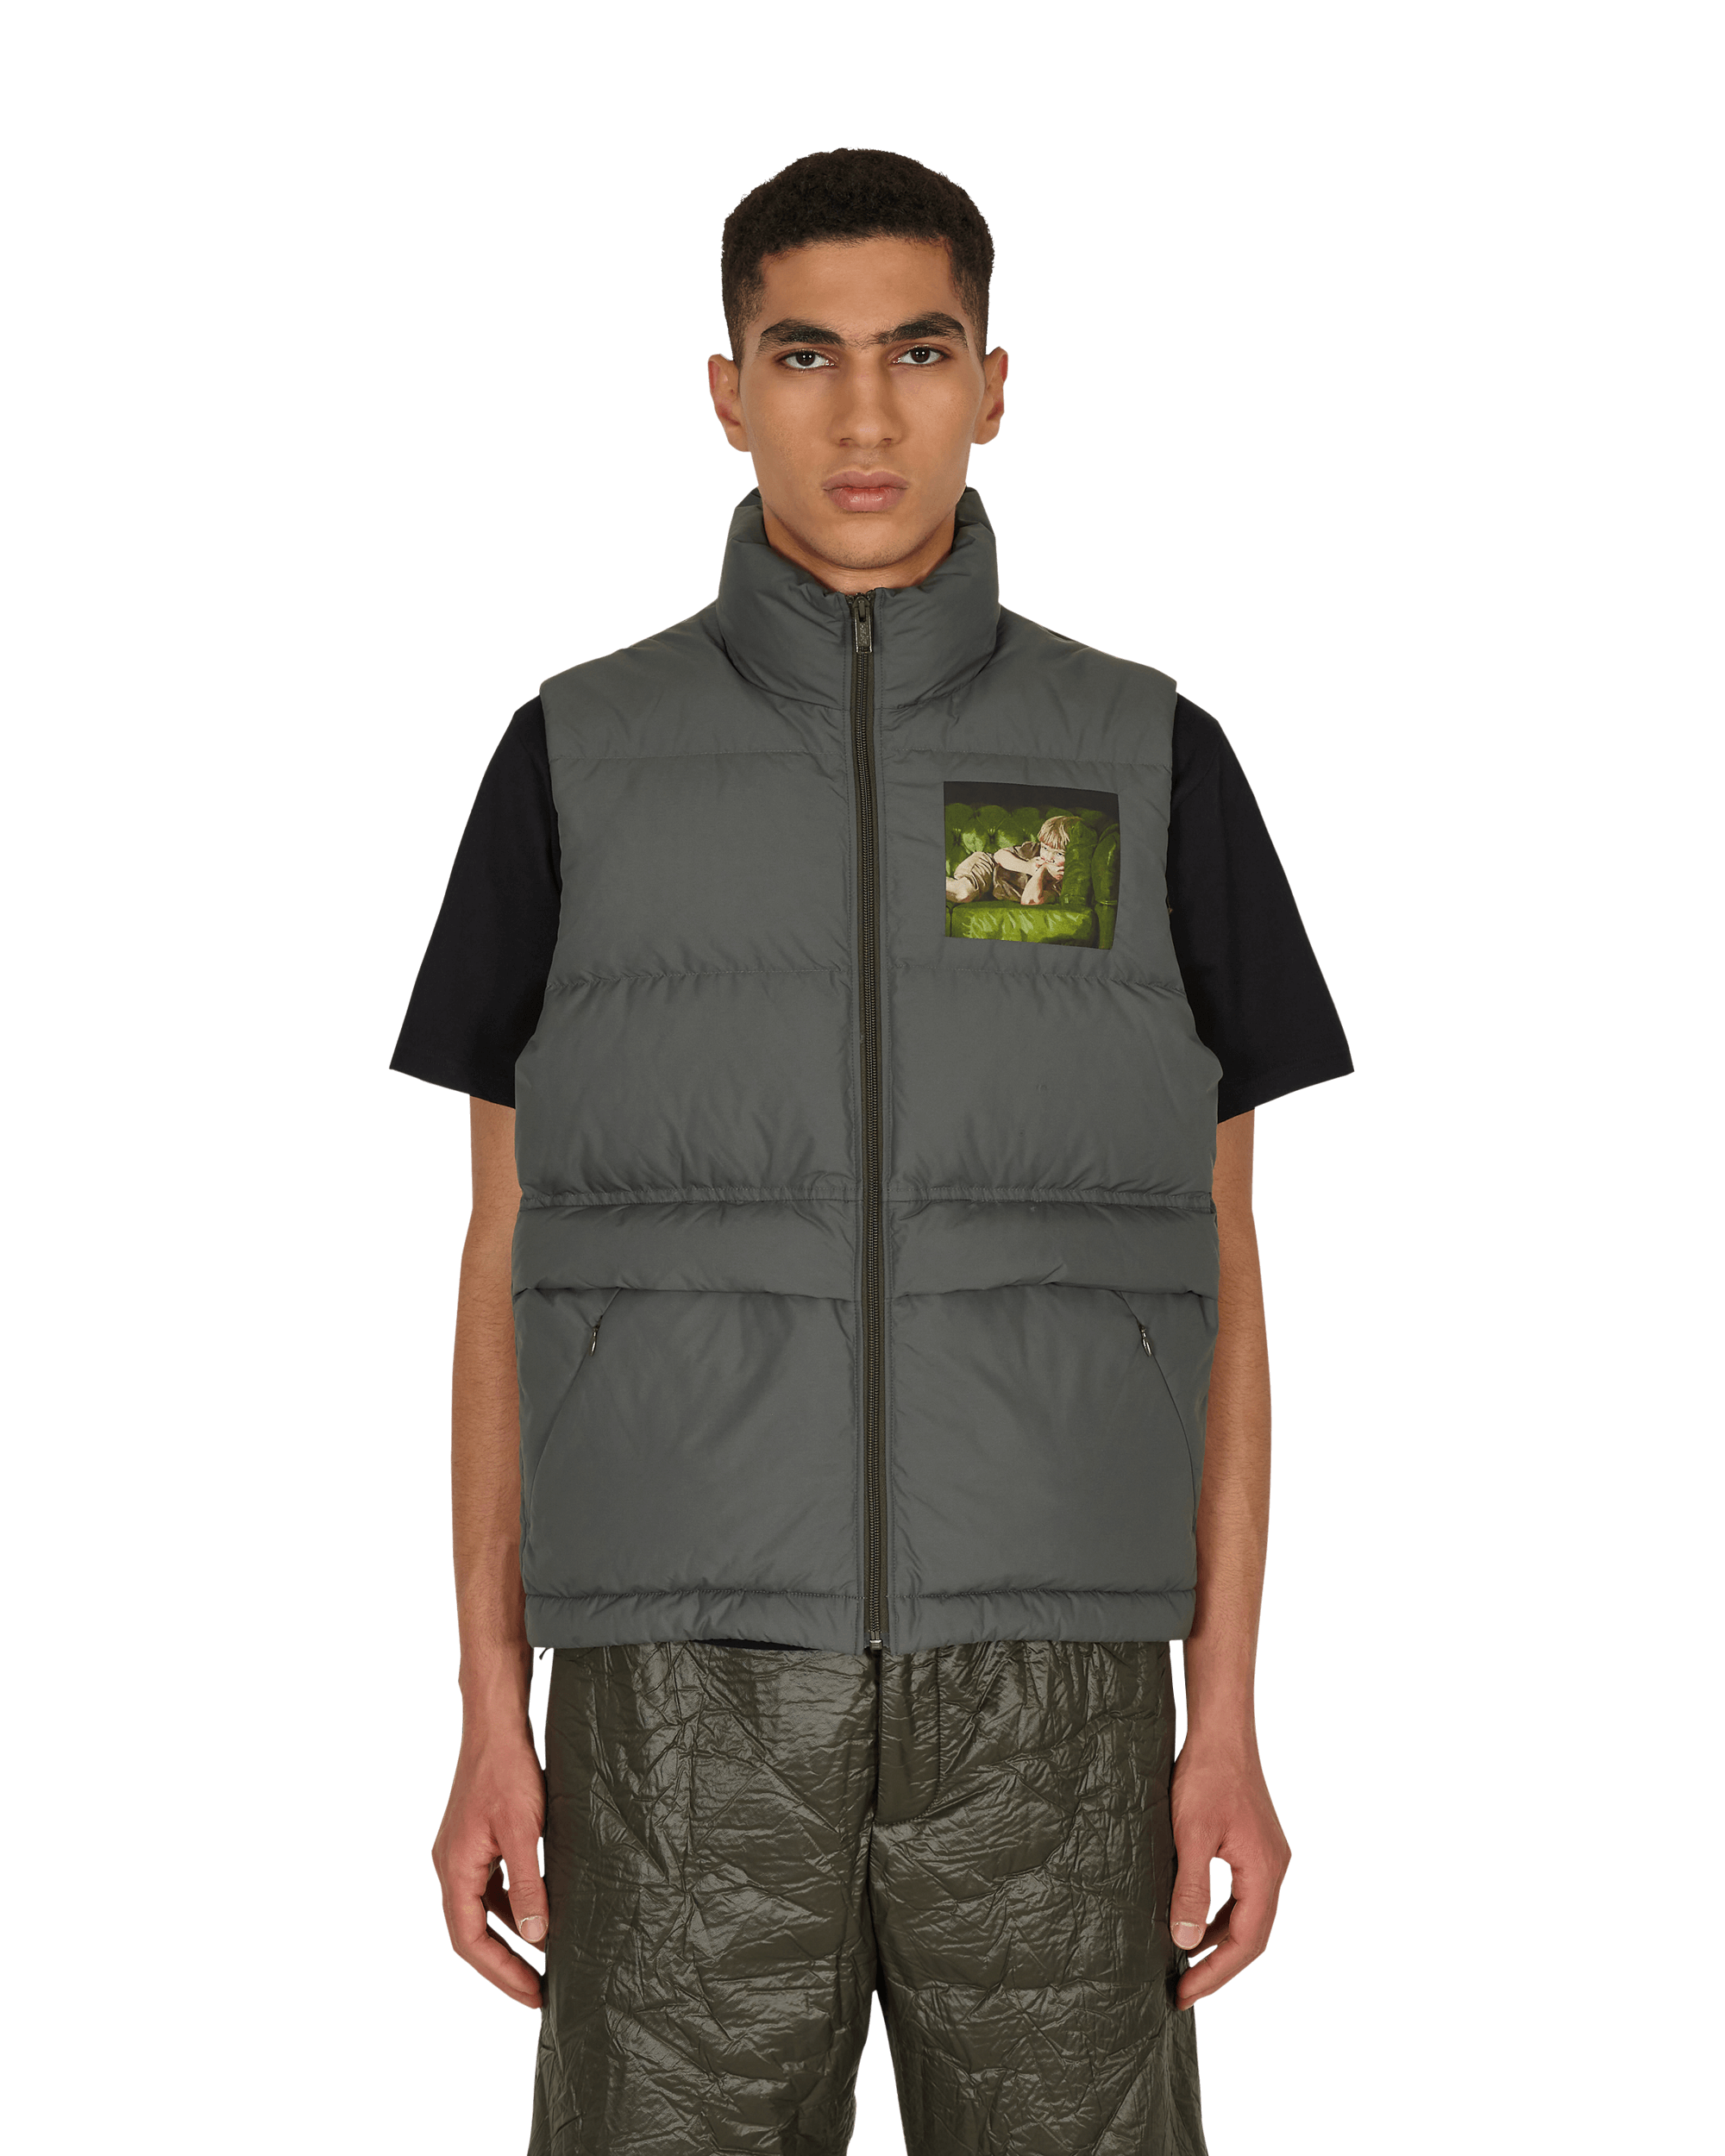 Undercover Vest Gray Khaki Coats and Jackets Vests UC2A4001 GRAY